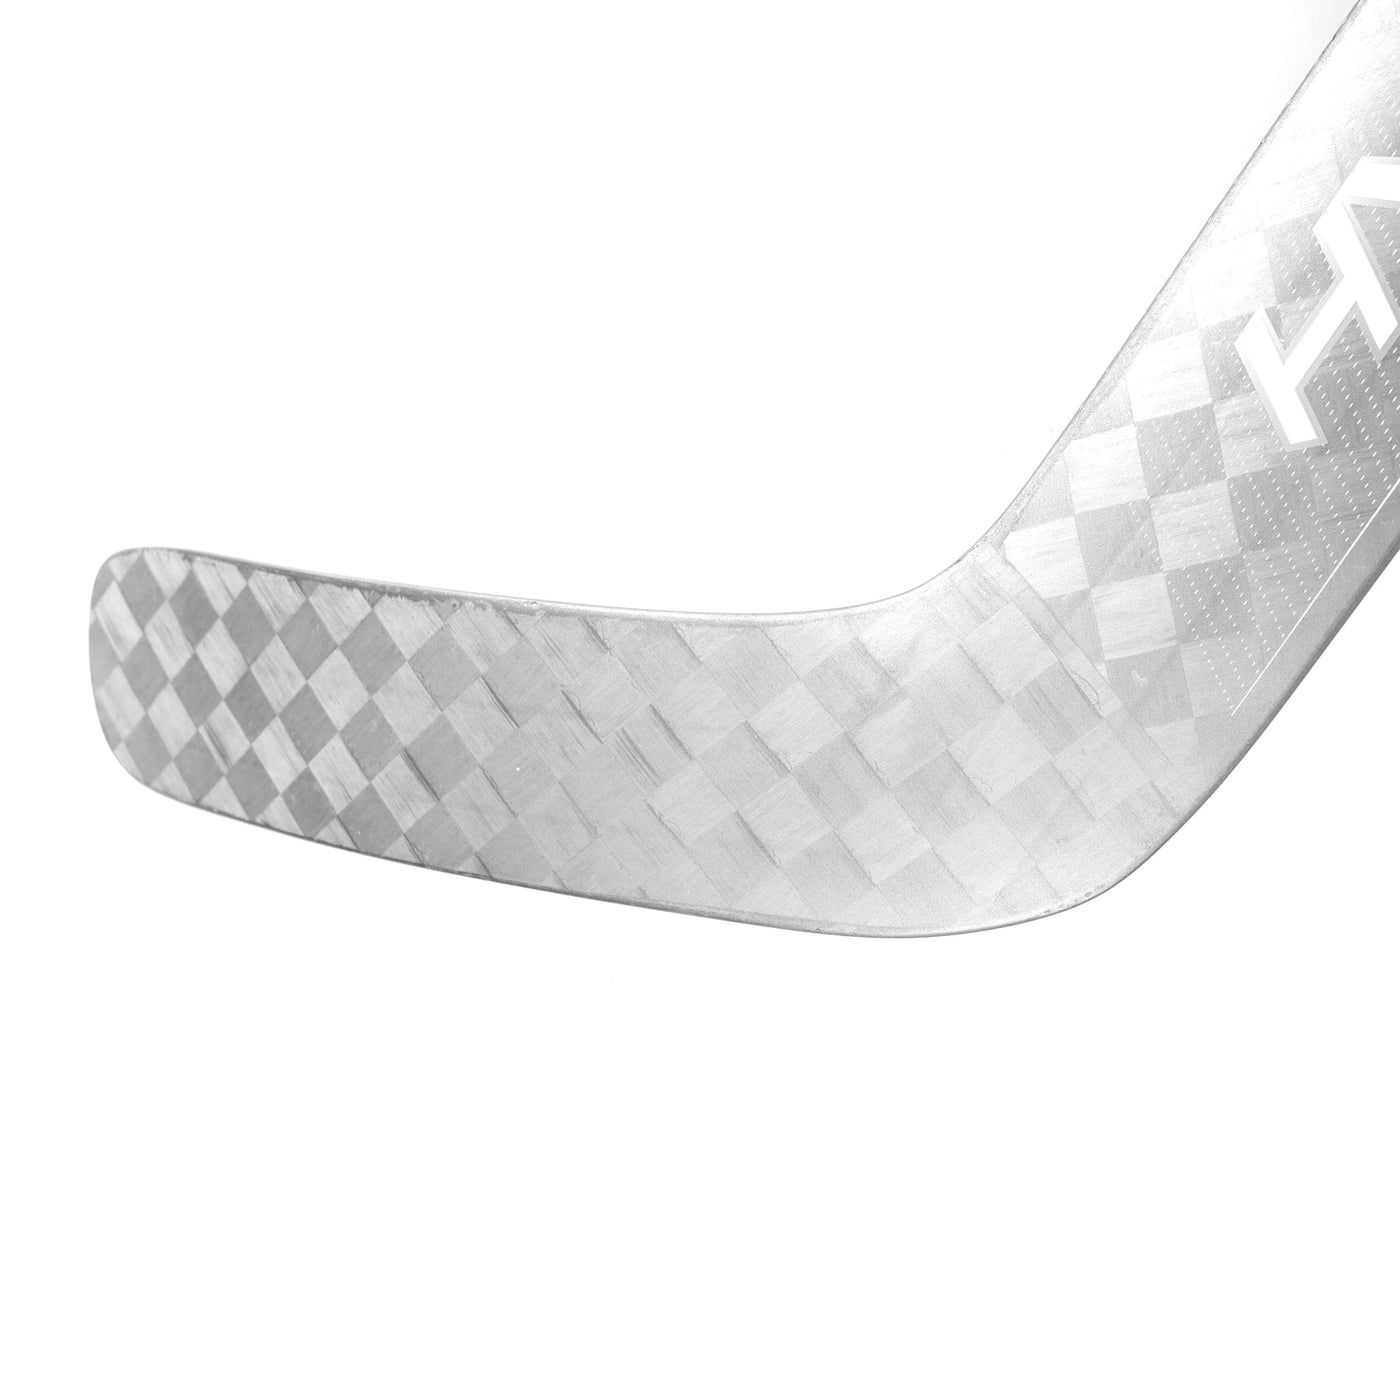 Bauer Vapor HyperLite Senior Goalie Stick - The Hockey Shop Source For Sports